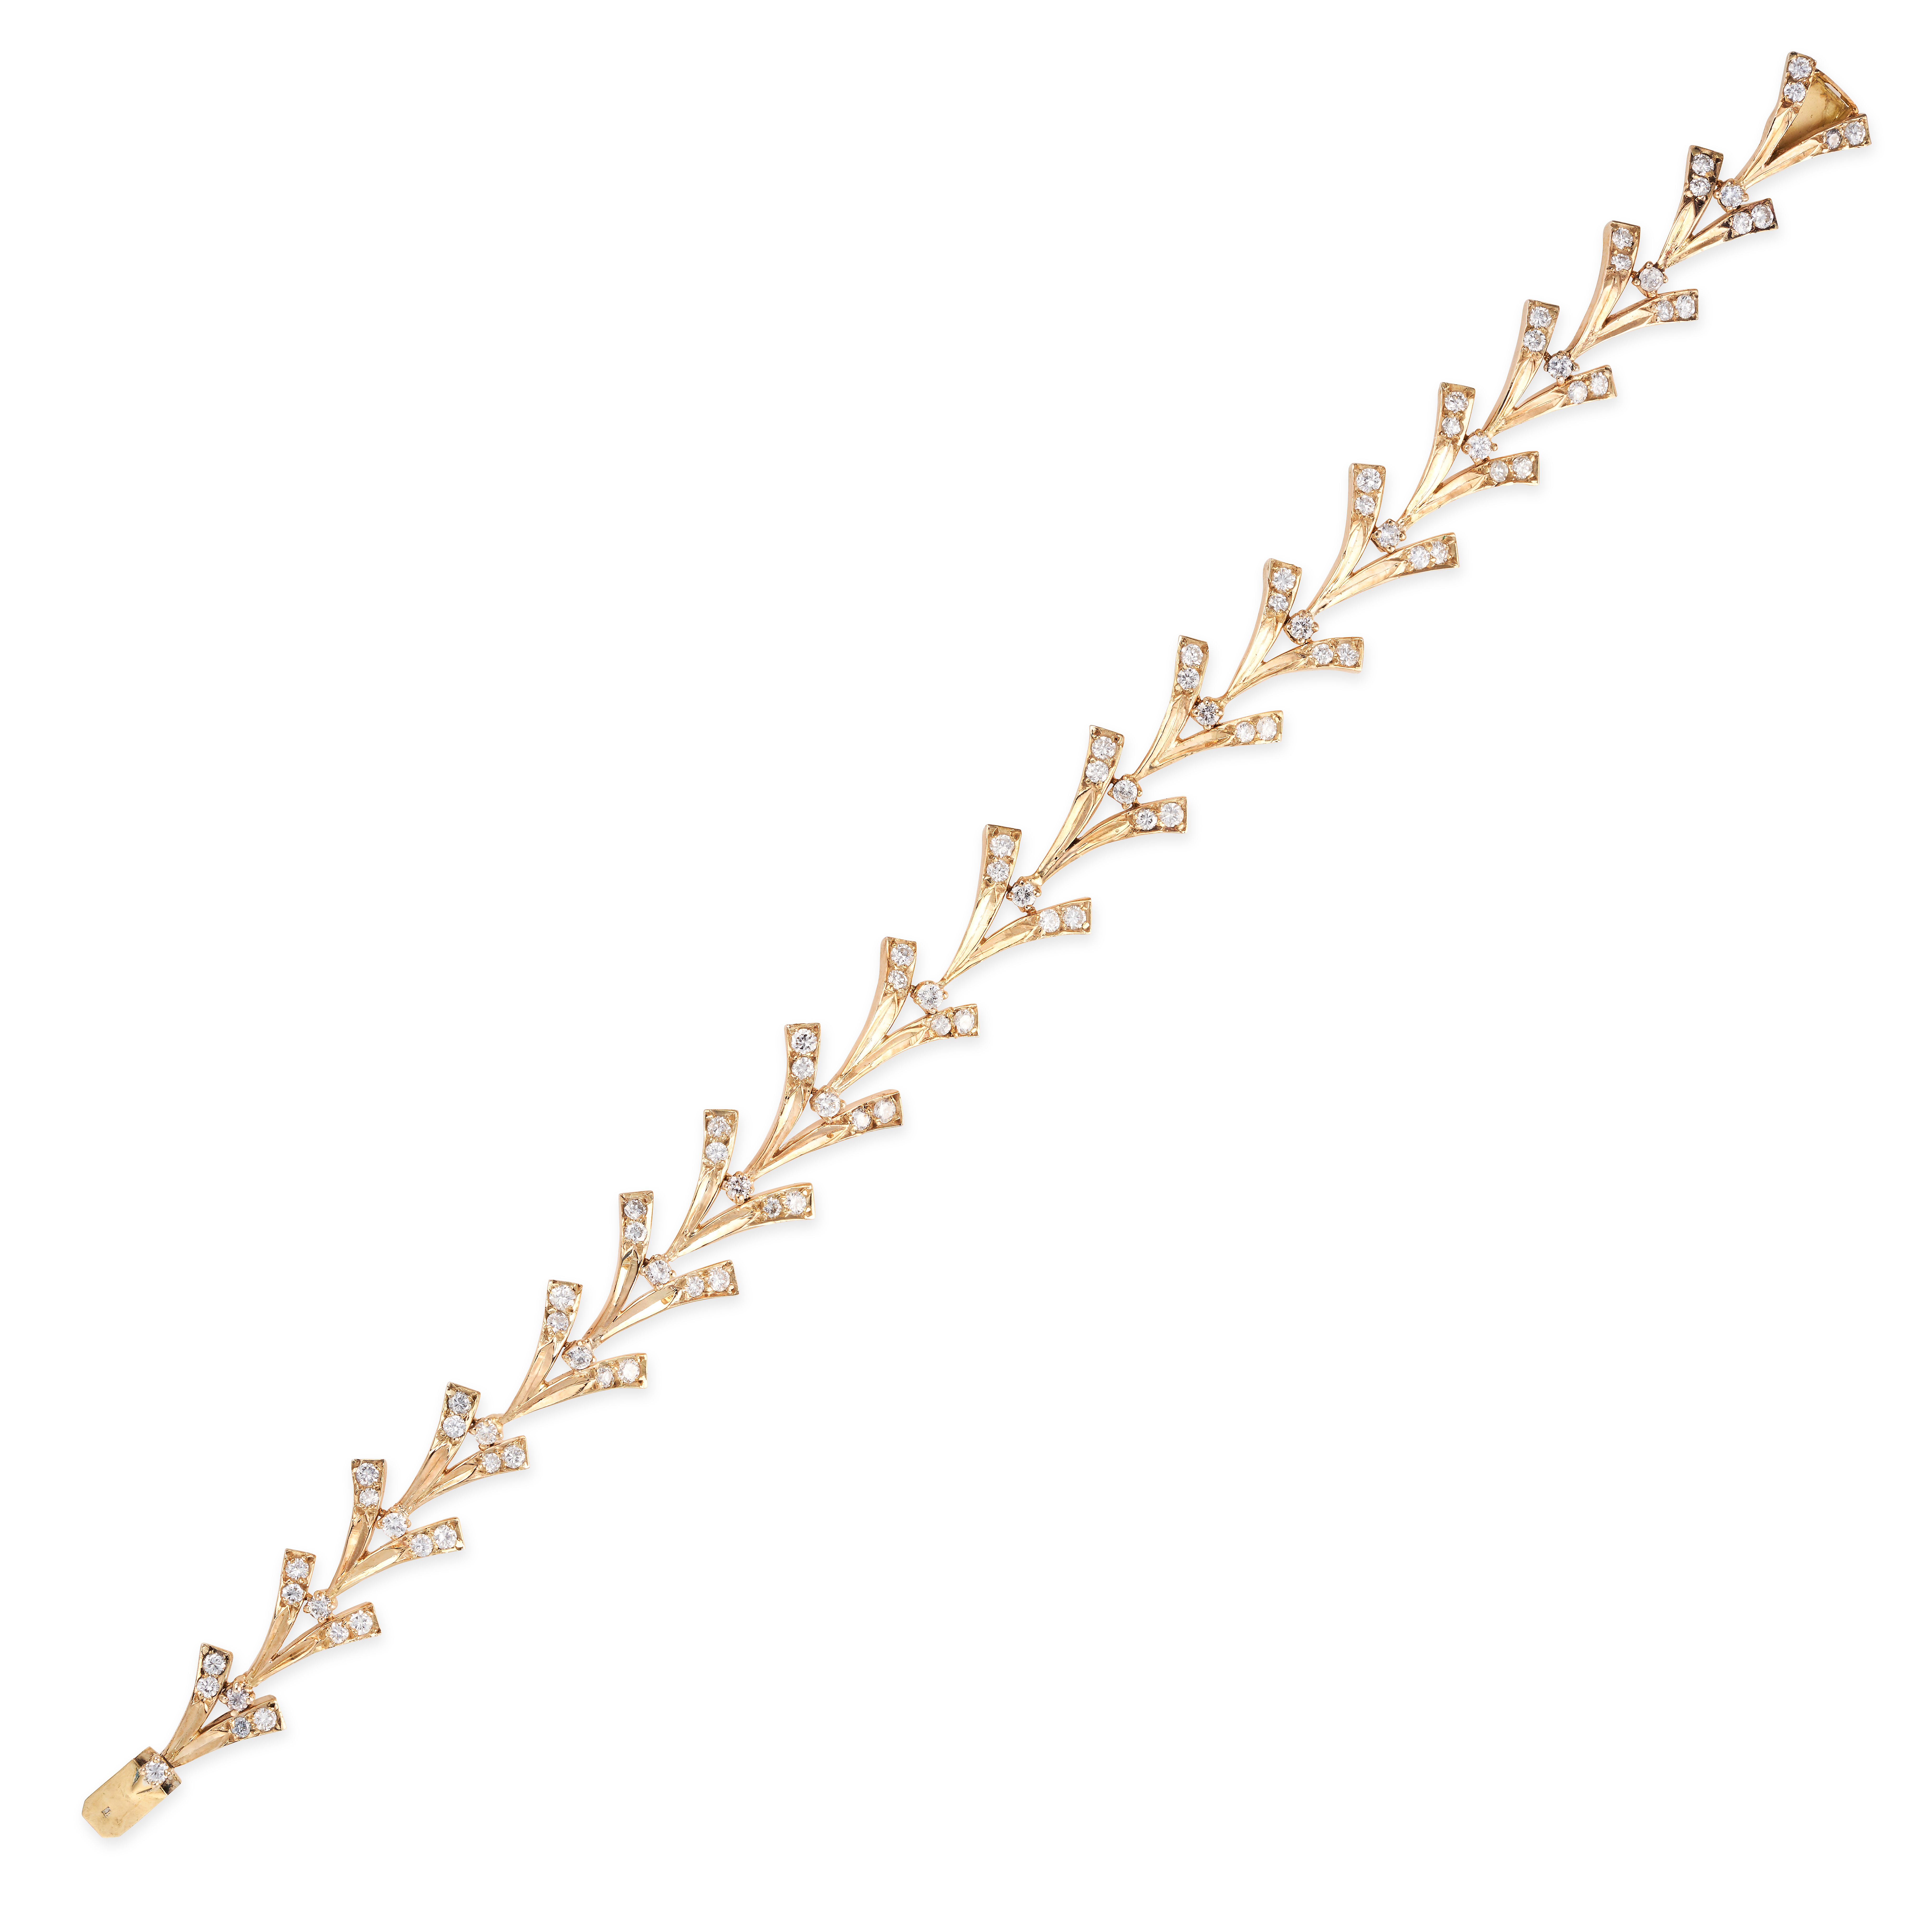 A DIAMOND BRACELET comprising a row of chevron links set with round brilliant cut diamonds, the d...